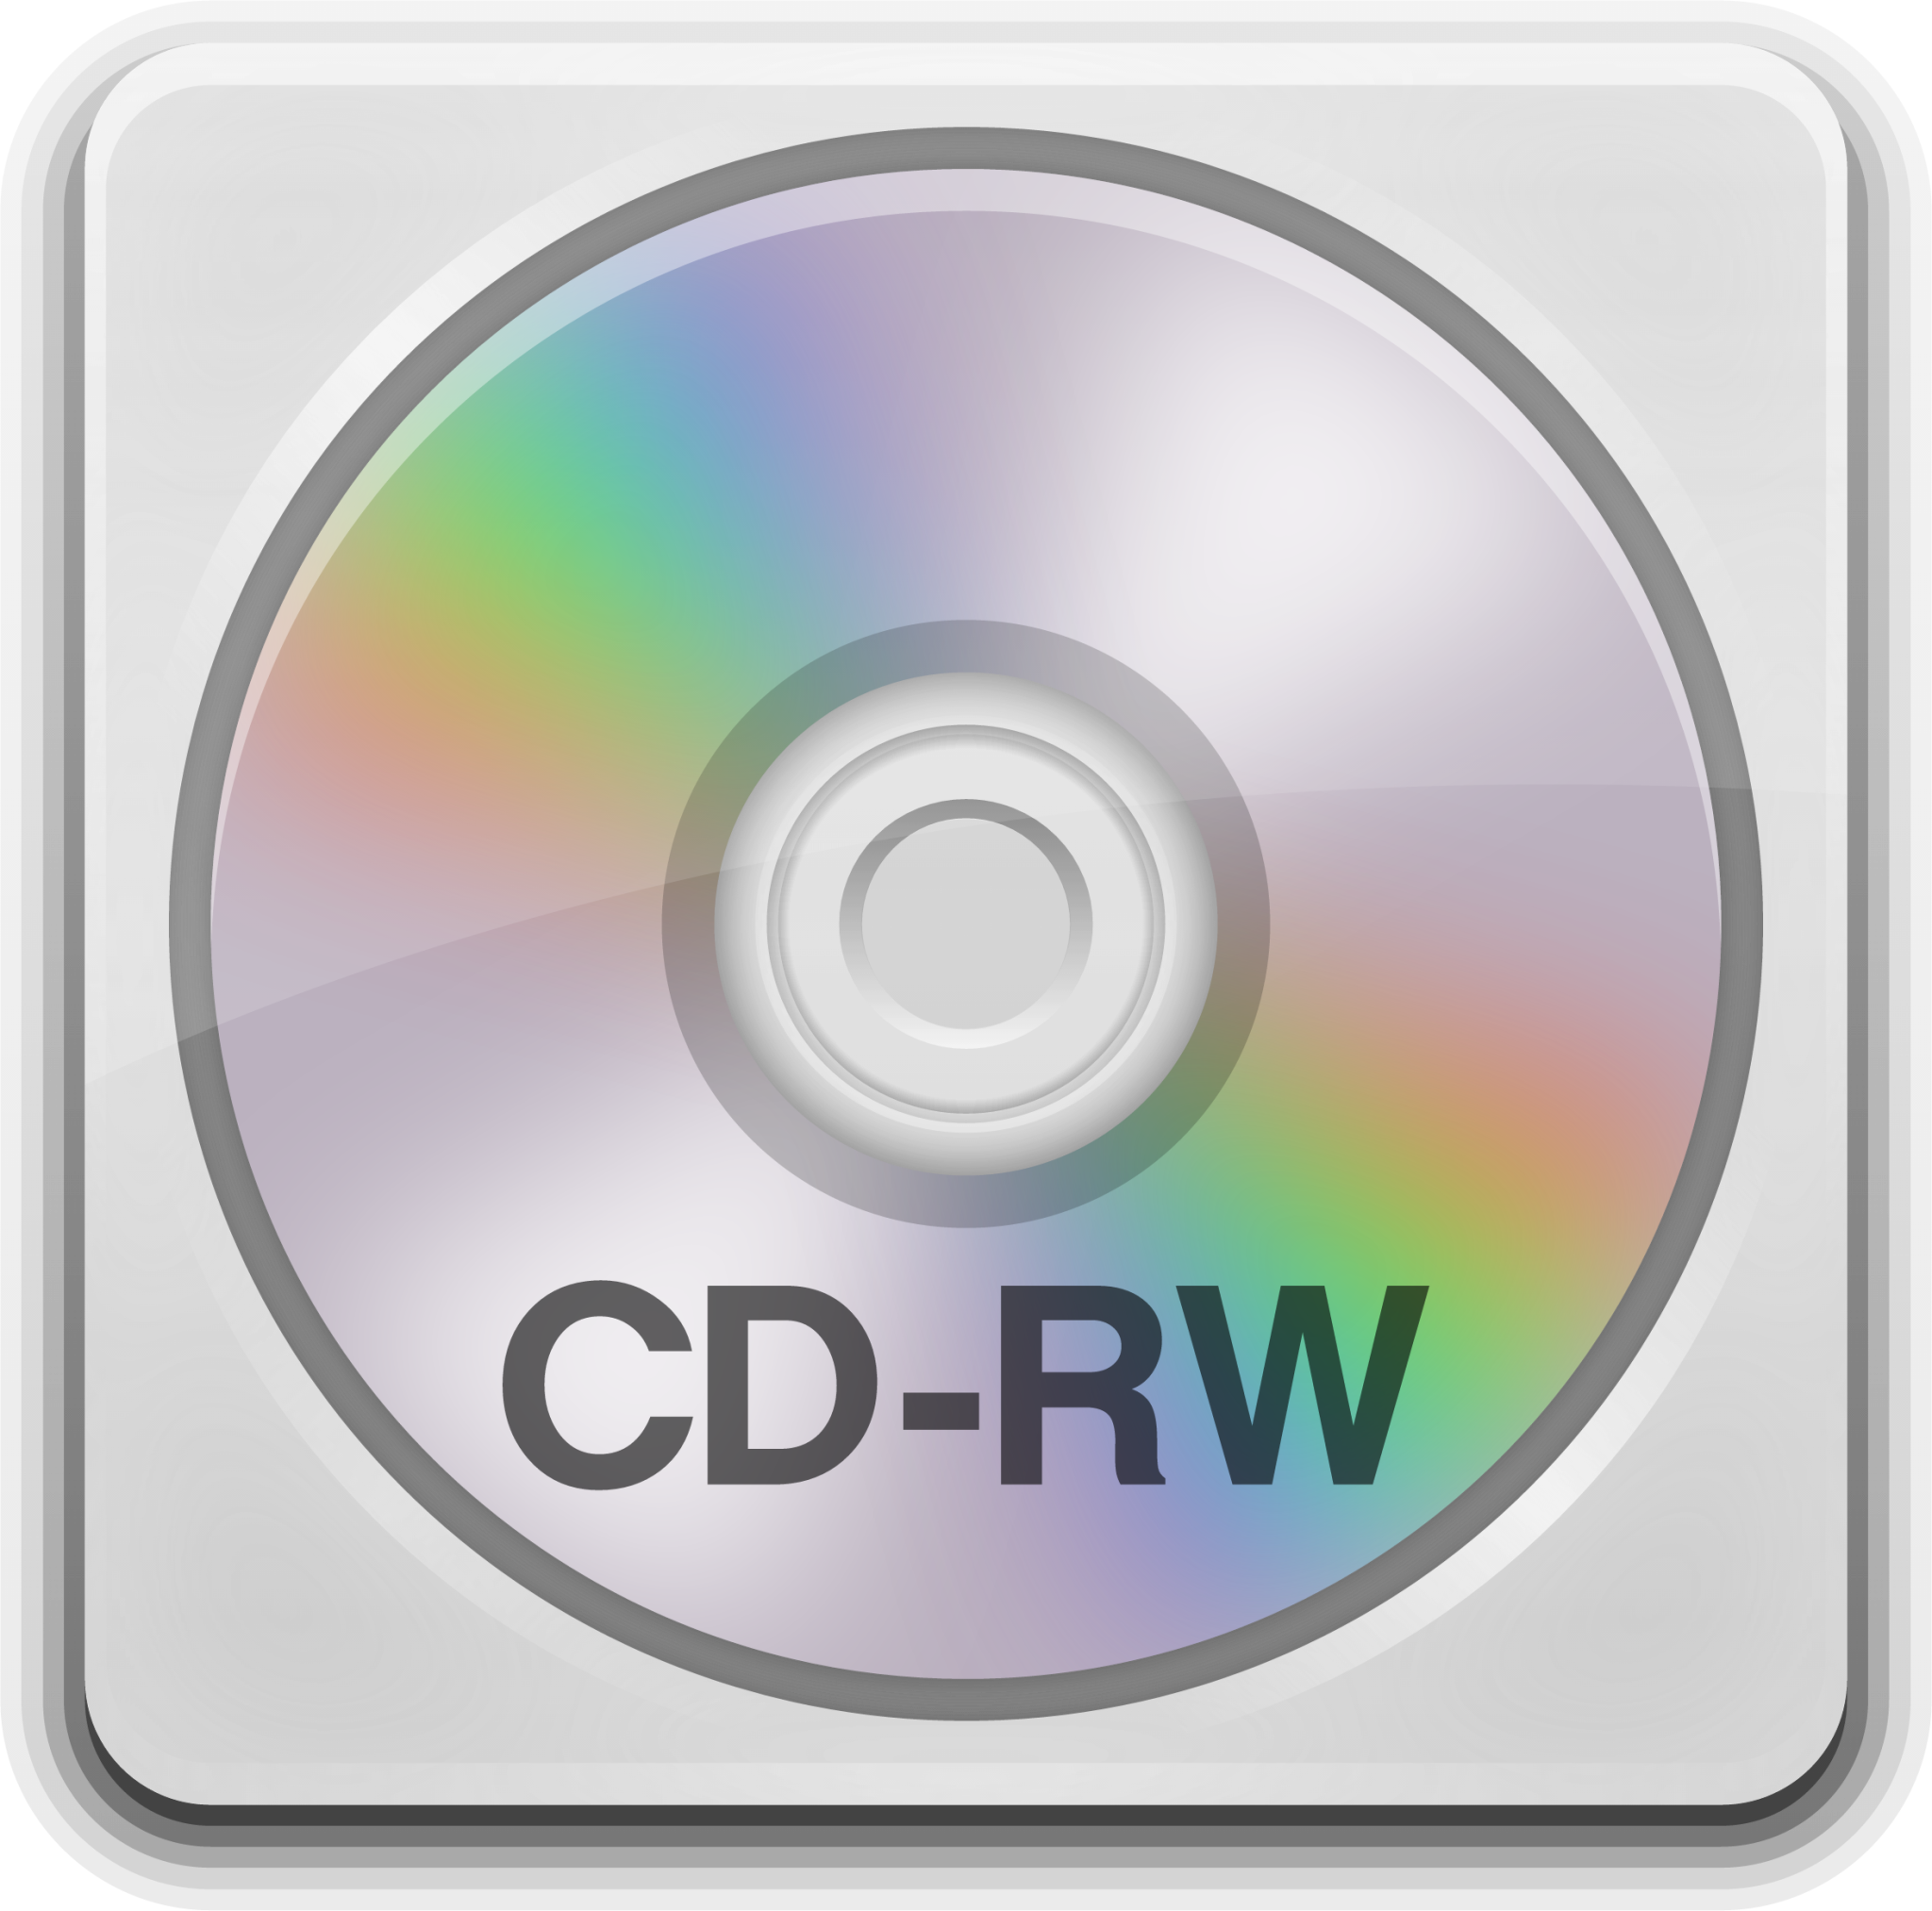 media optical cd rw icon